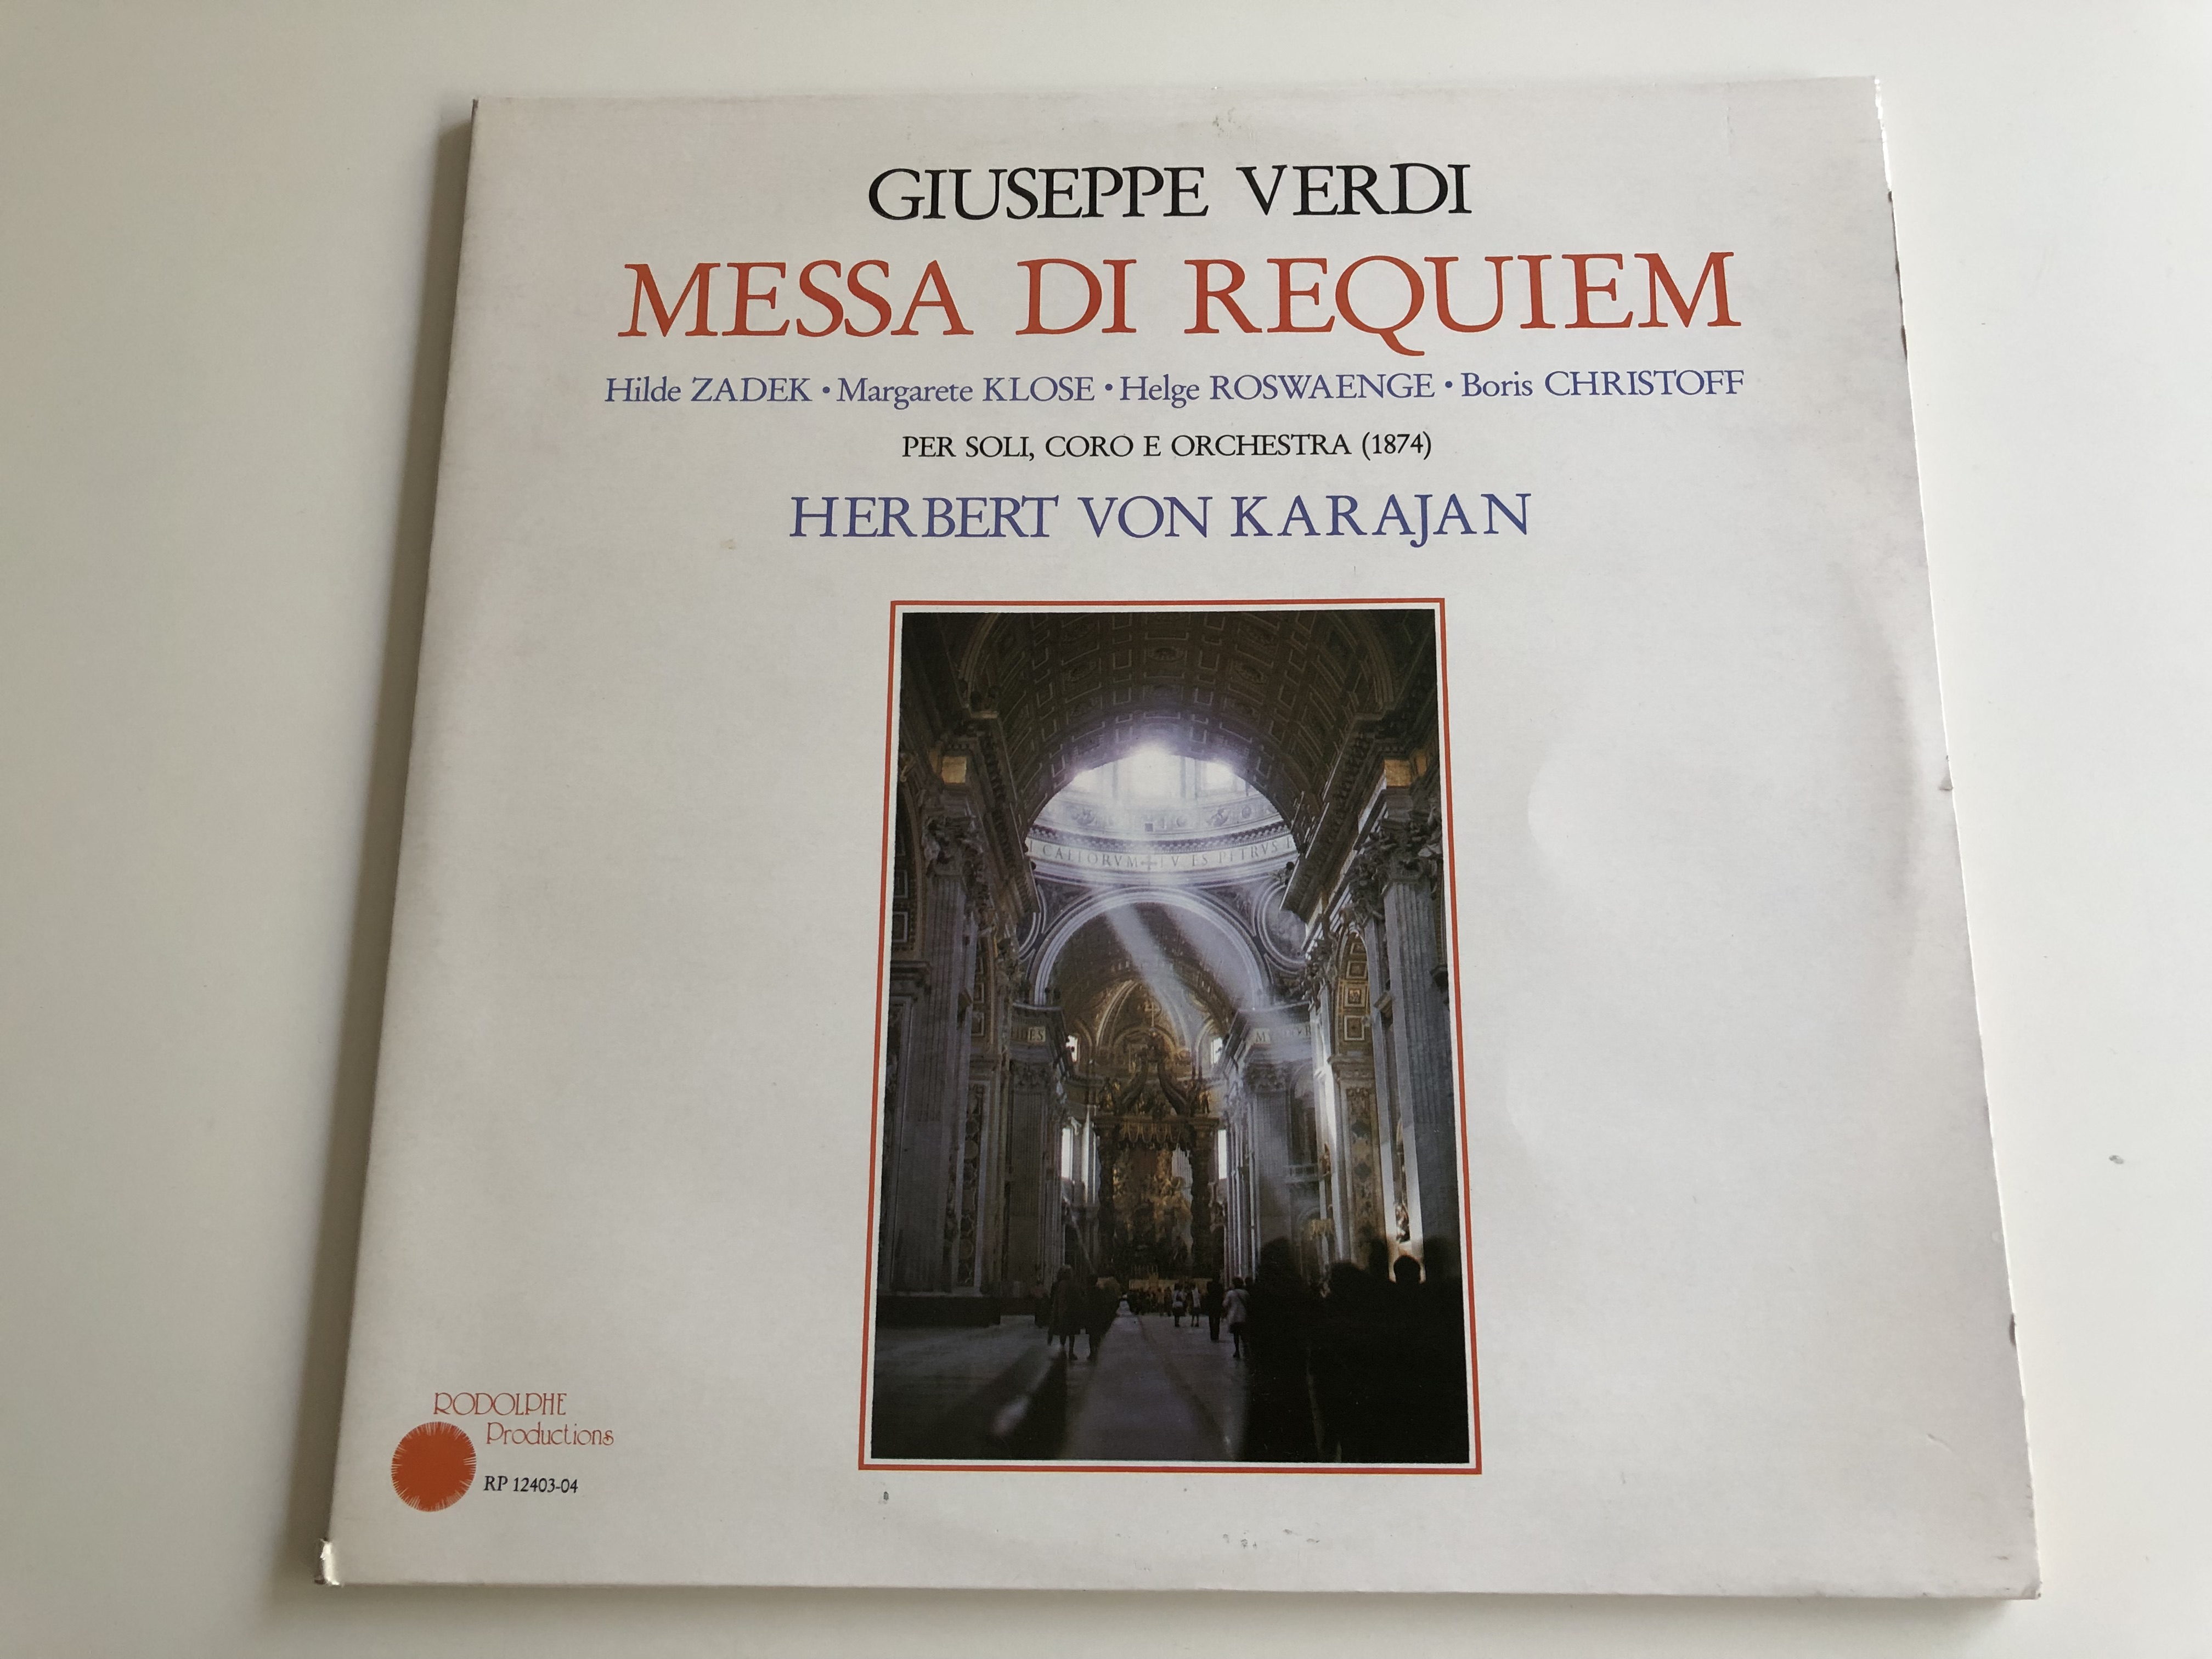 giuseppe-verdi-messa-di-requiem-zadek-klose-roswaenge-christoff-conducted-herbert-von-karajan-rodolphe-productions-2x-lp-rp-12403-04-1-.jpg